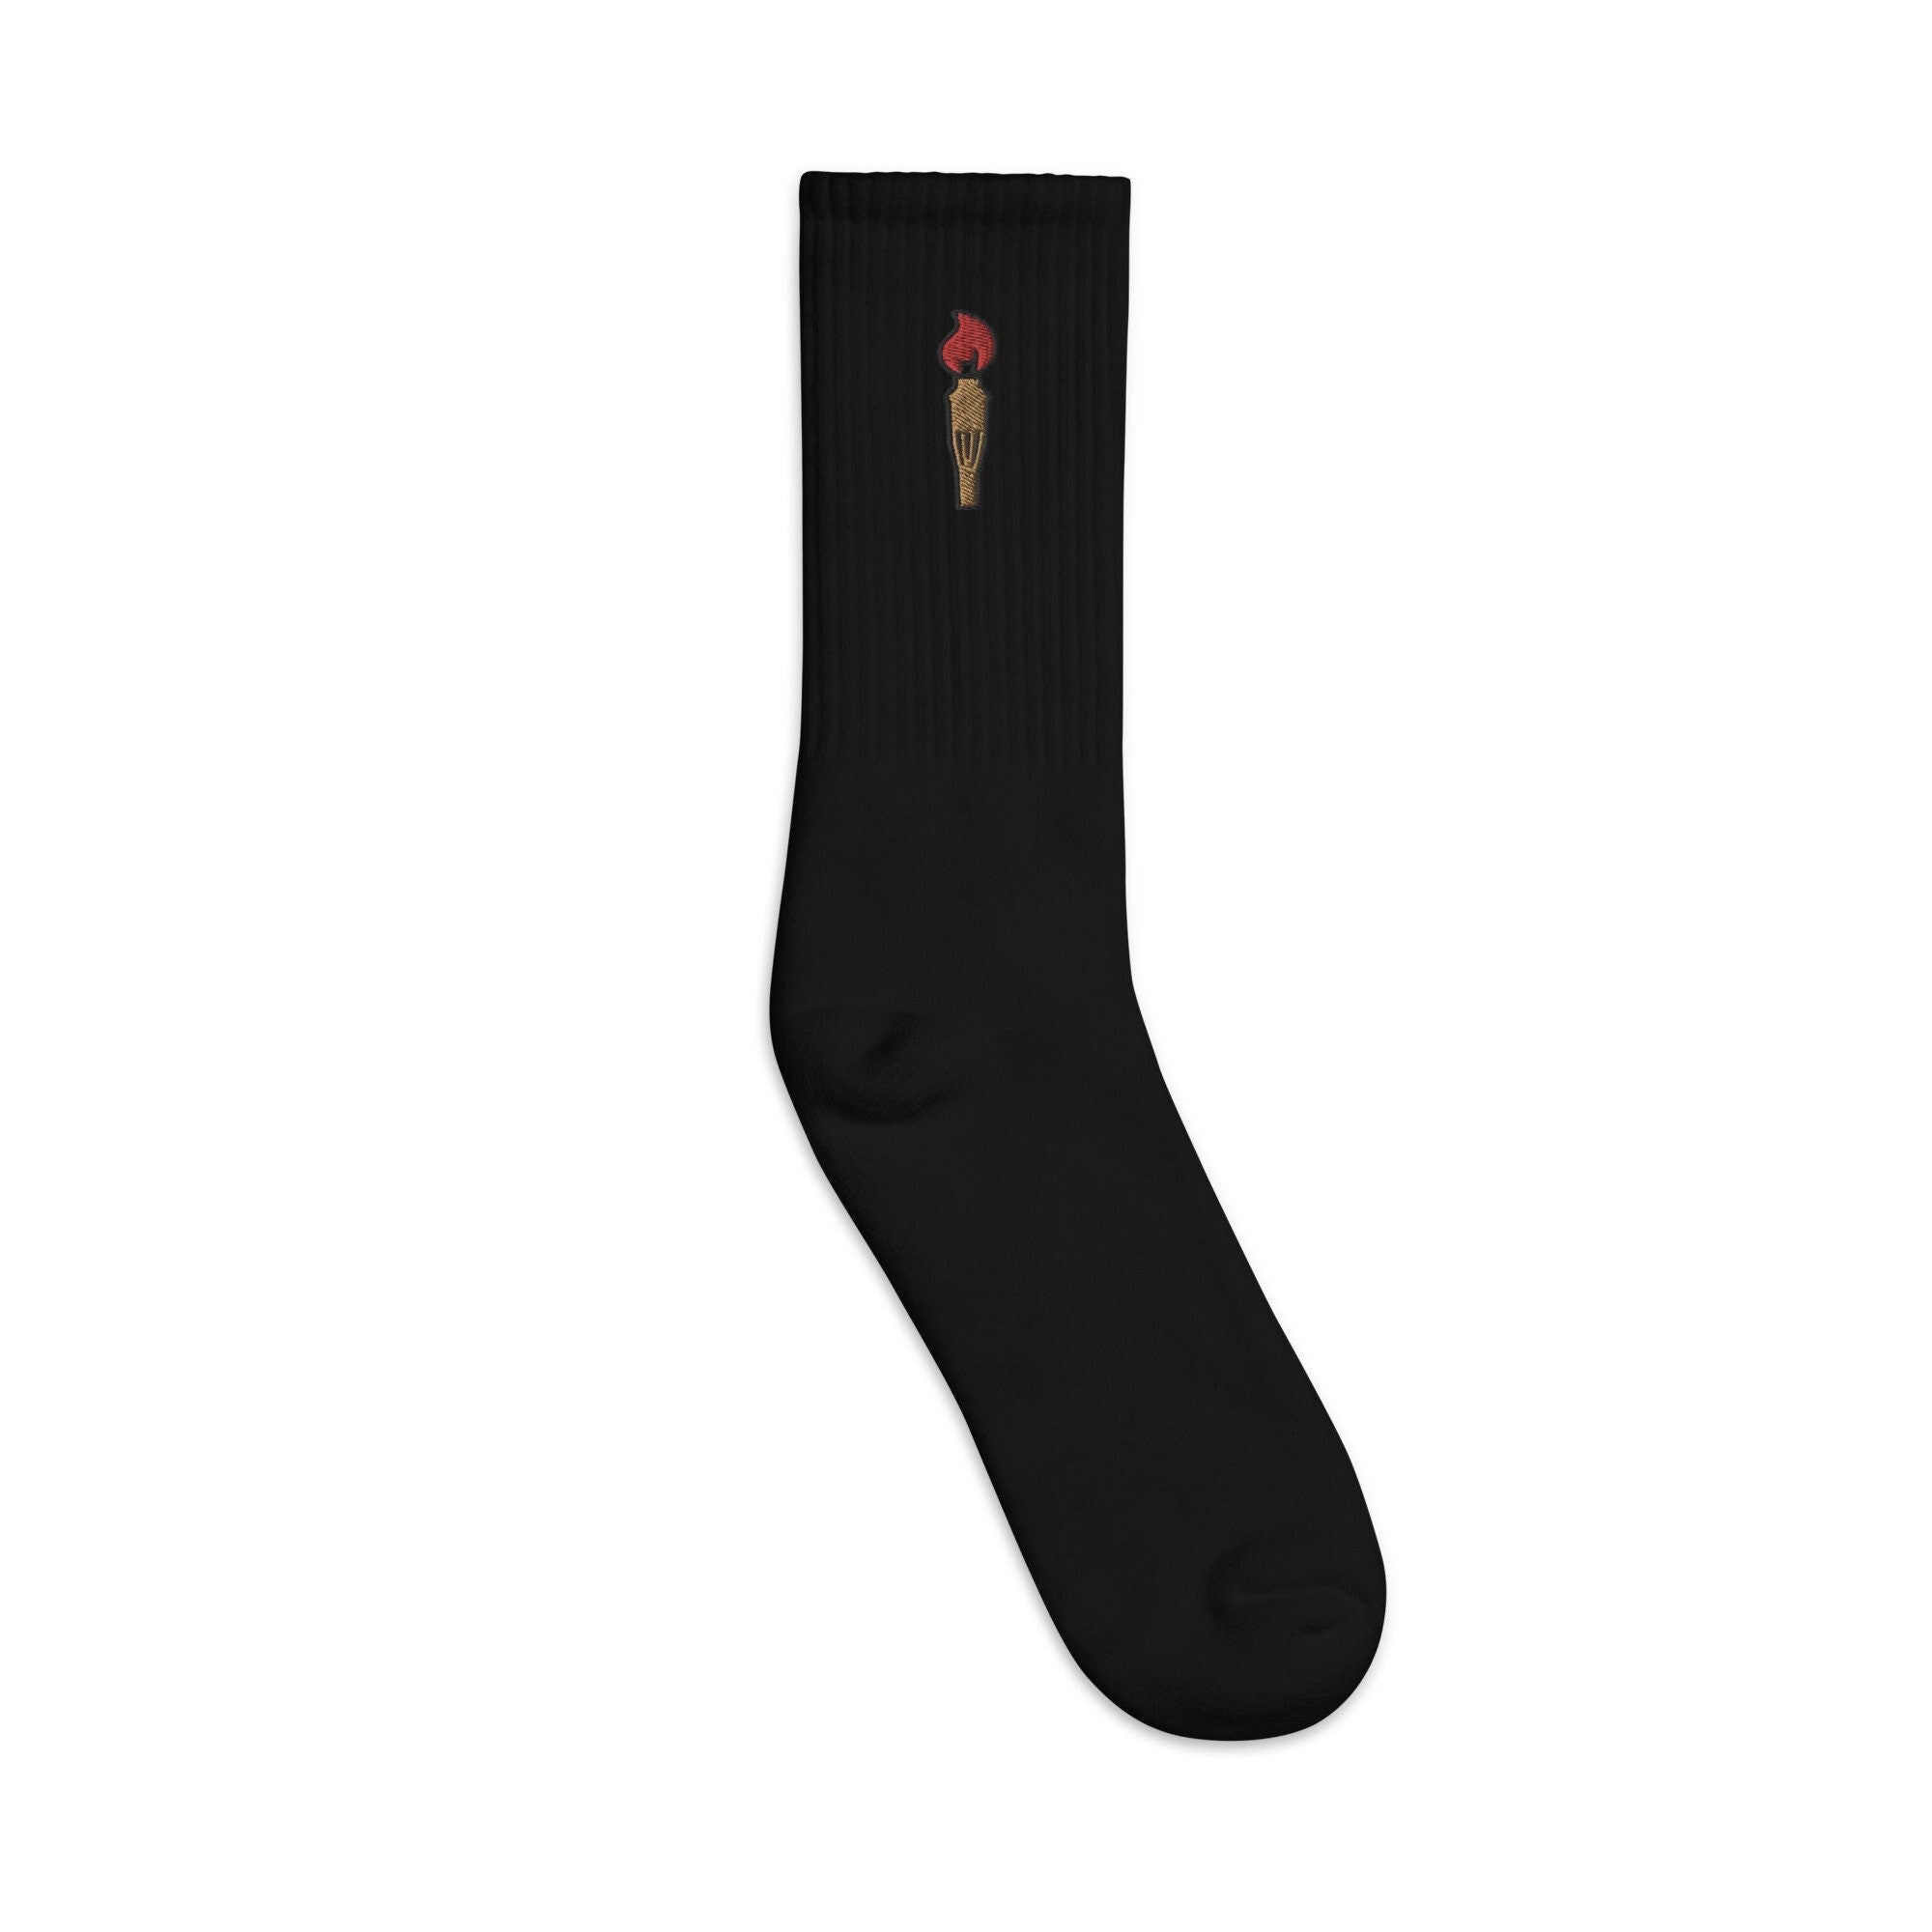 Tiki Torch Embroidered Socks, Premium Embroidered Socks, Long Socks Gift - Multiple Colors